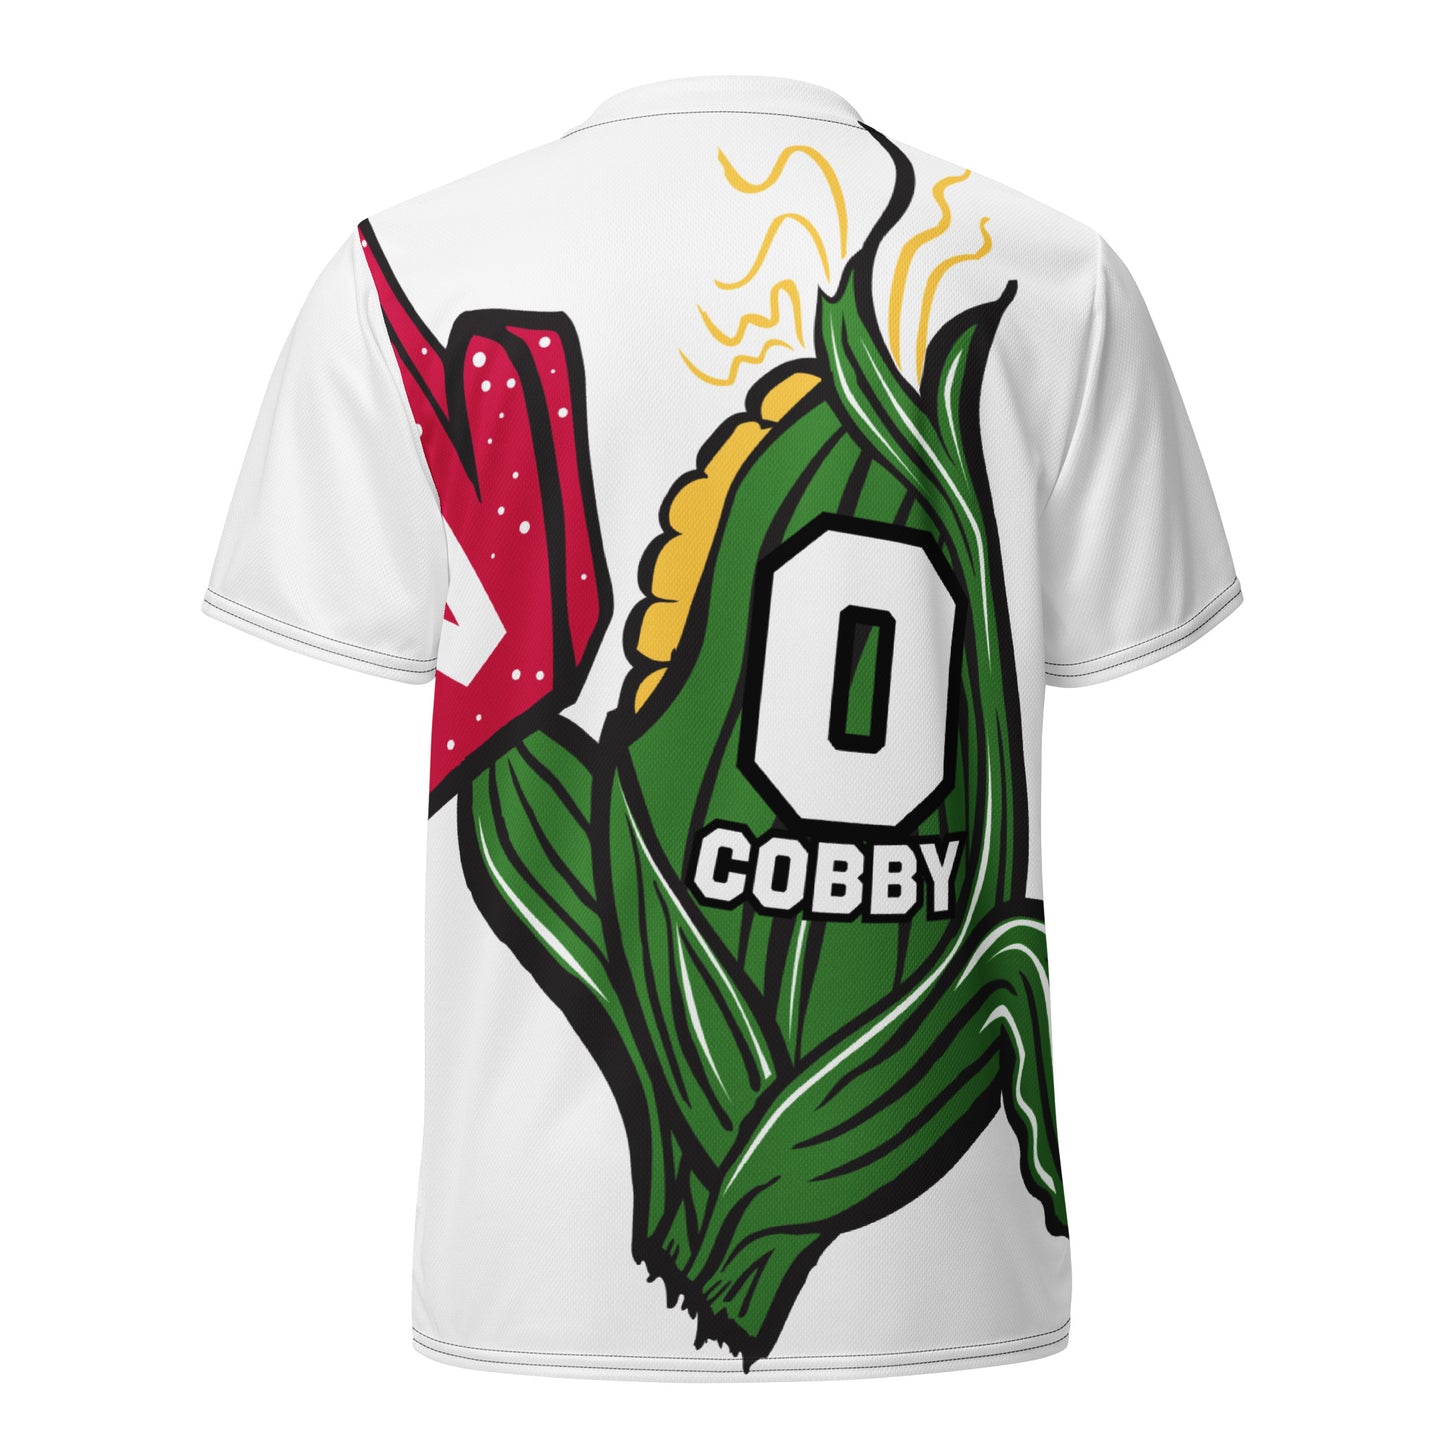 Unisex sports jersey w/Cobby